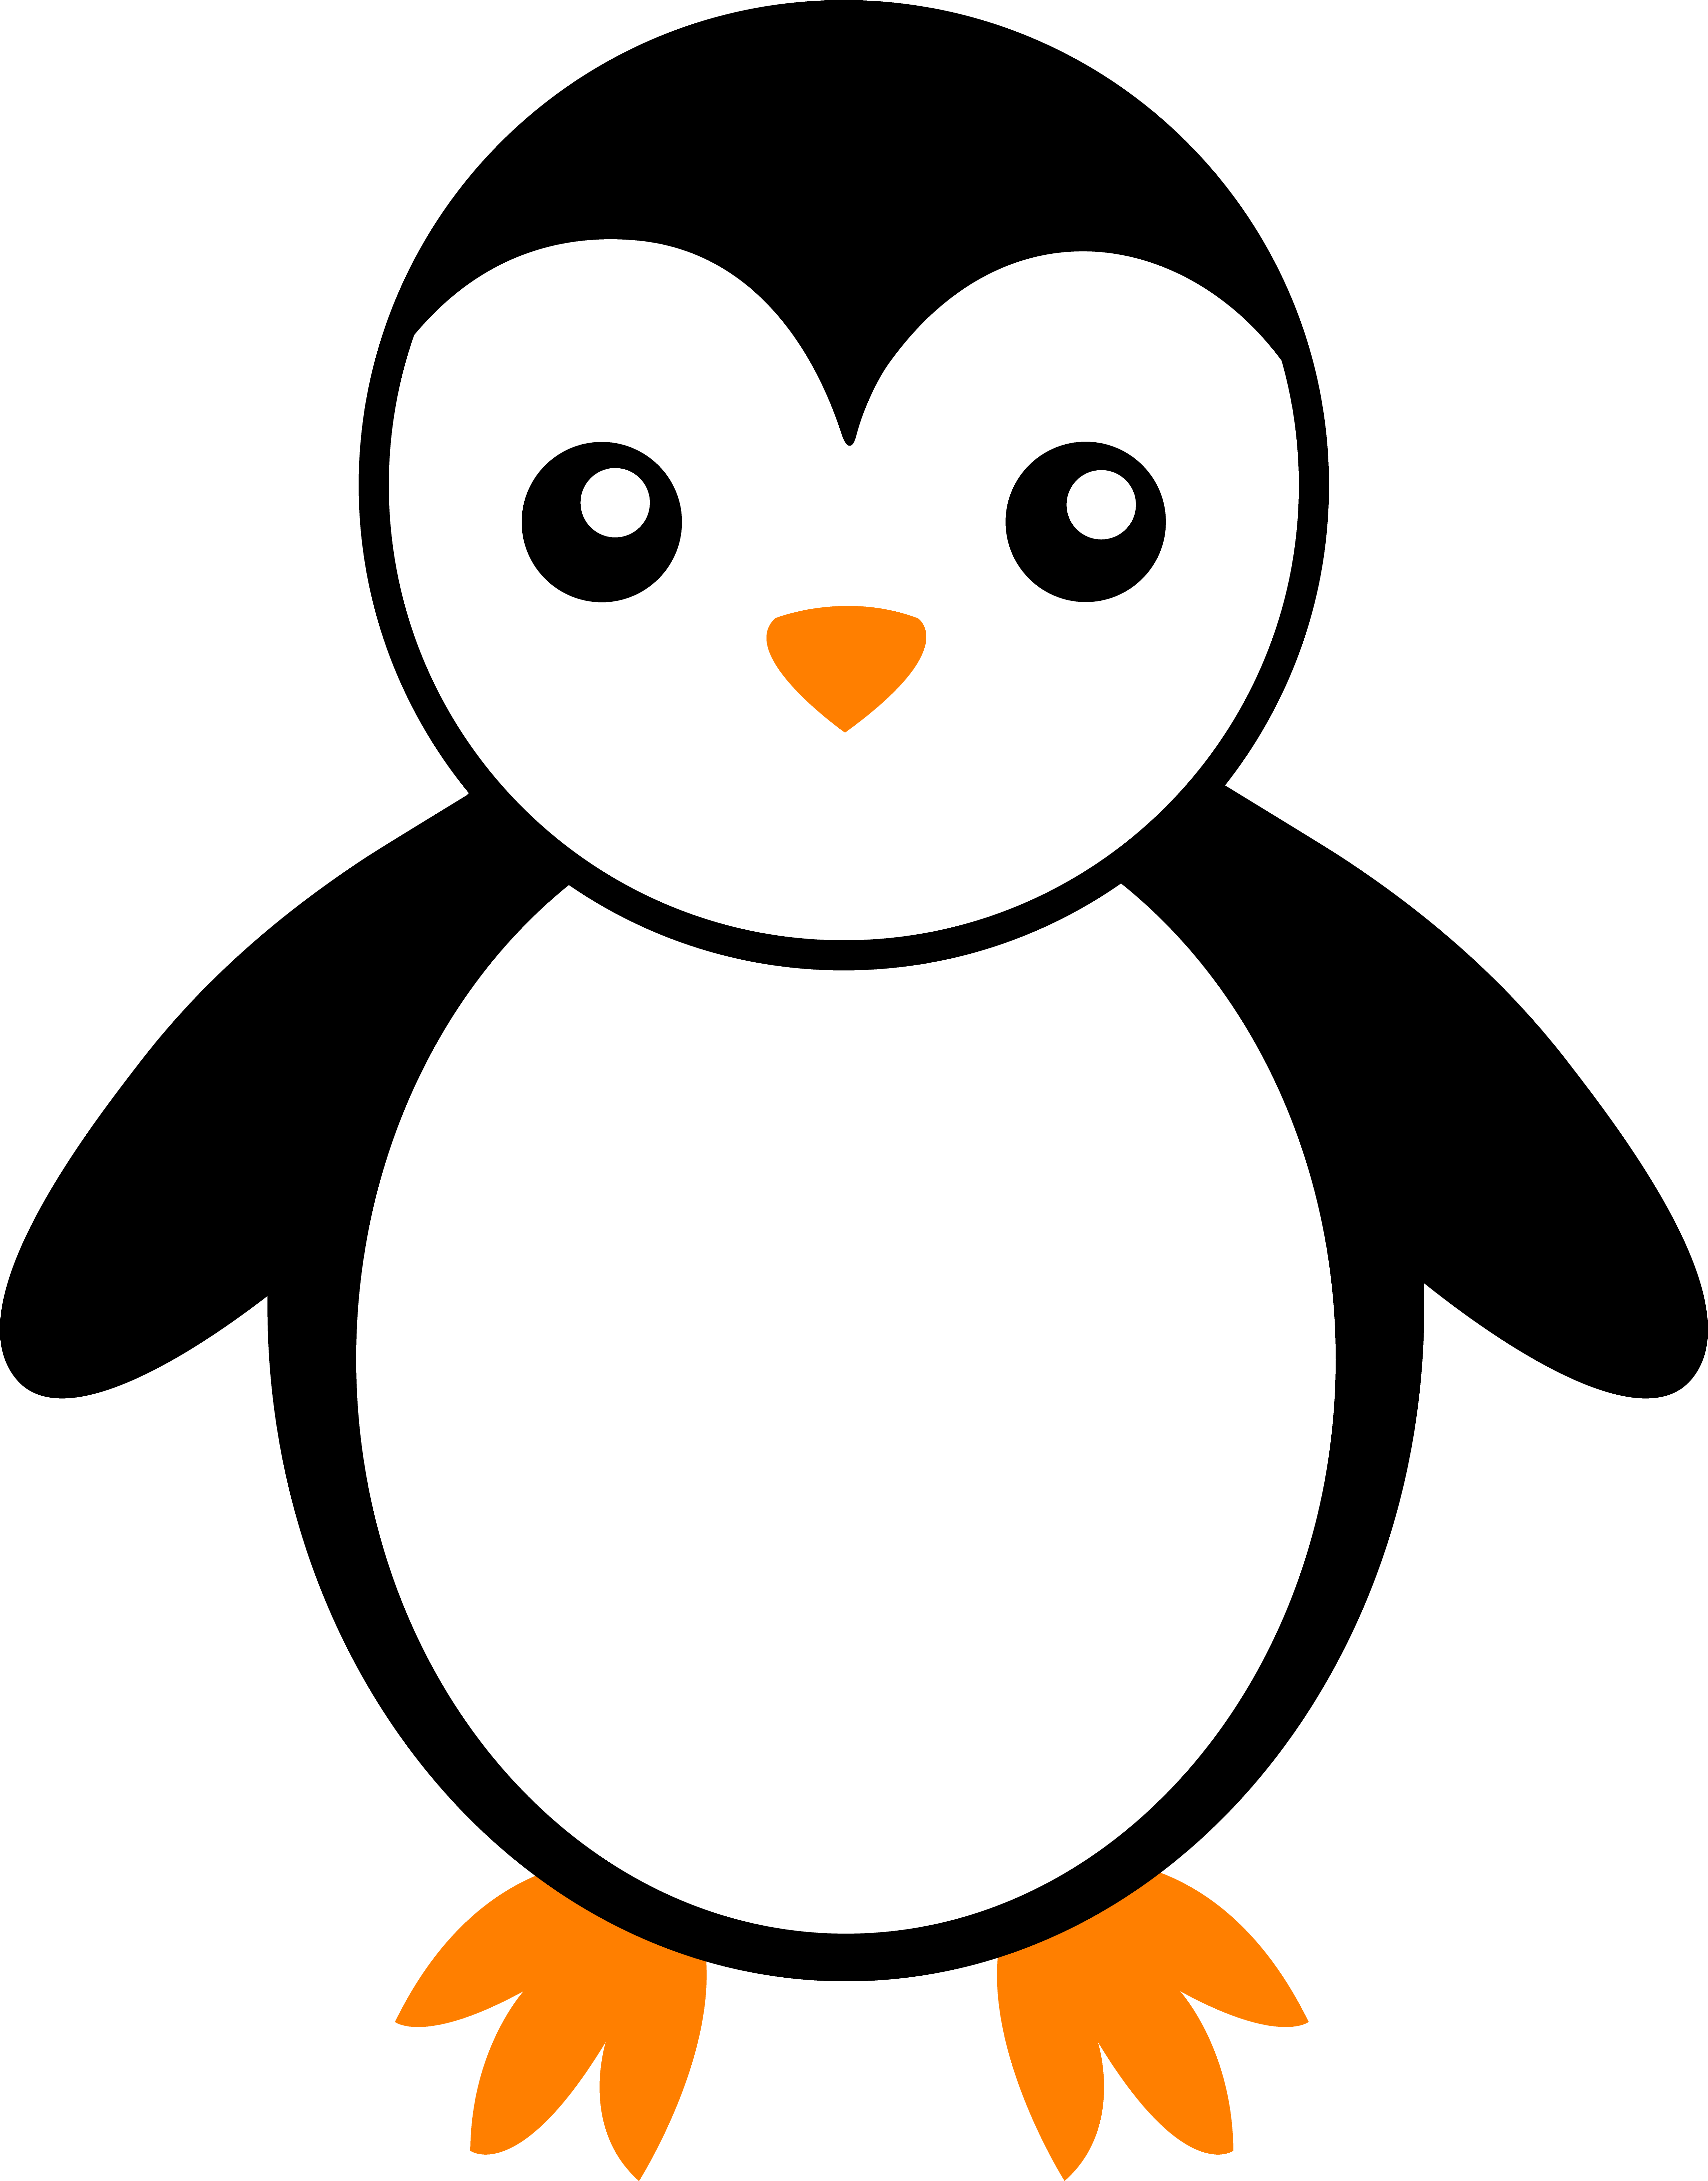 Penguin Clip Art Black And White | Clipart Panda - Free Clipart Images